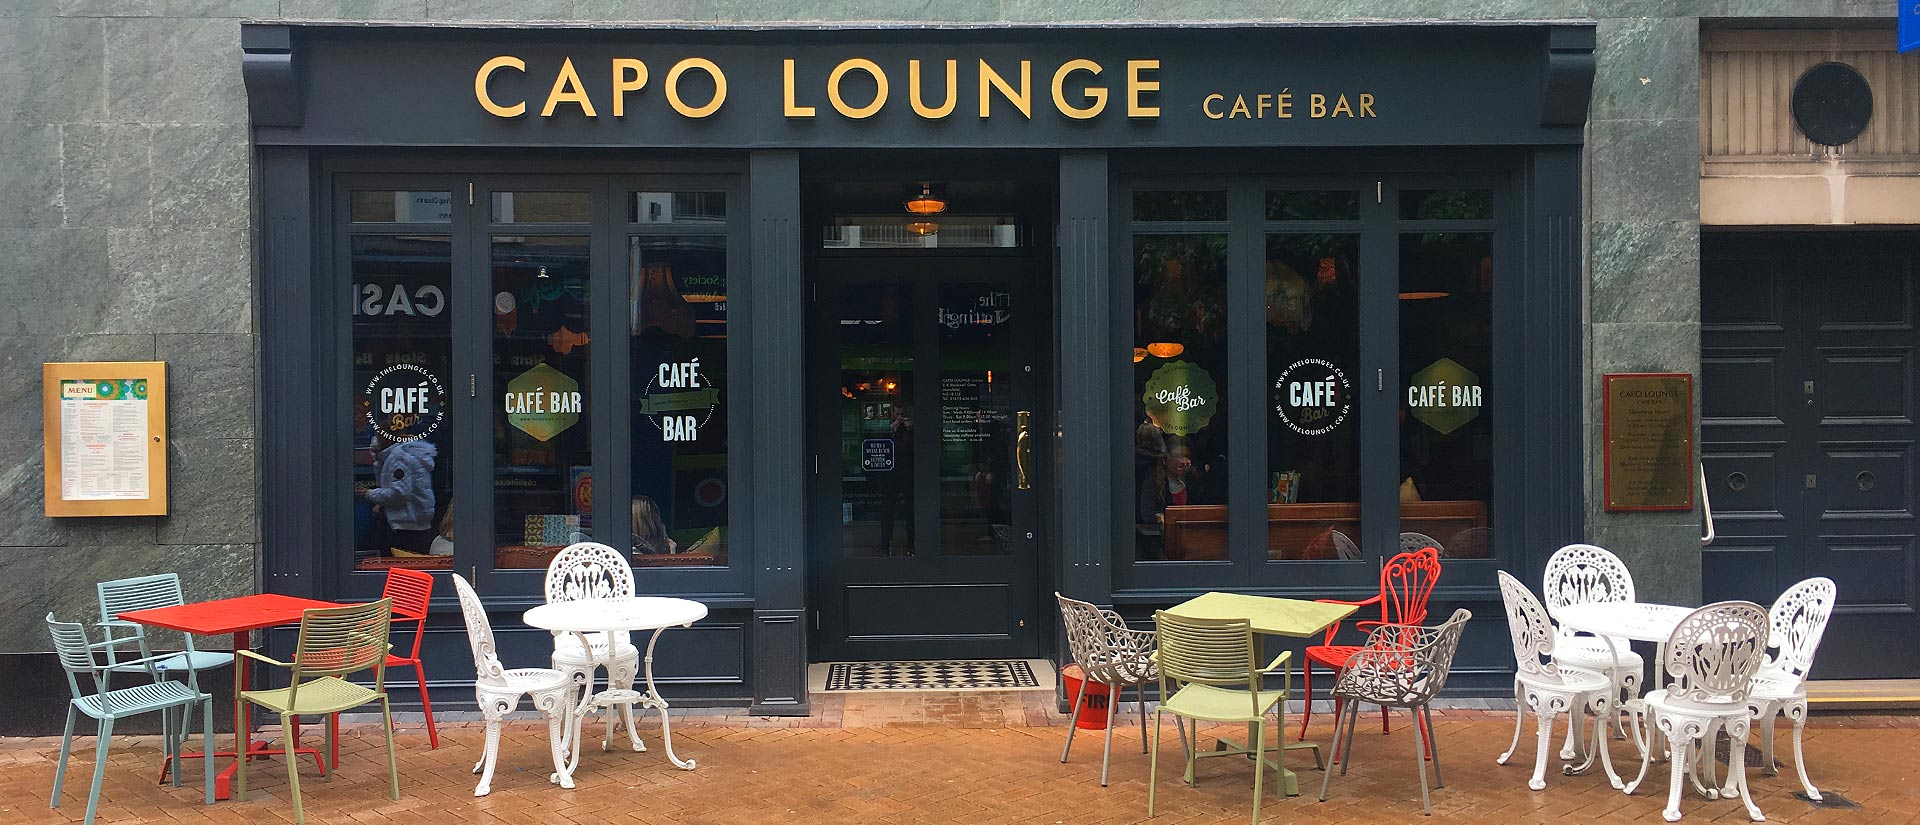 Capo Lounge, Mansfield